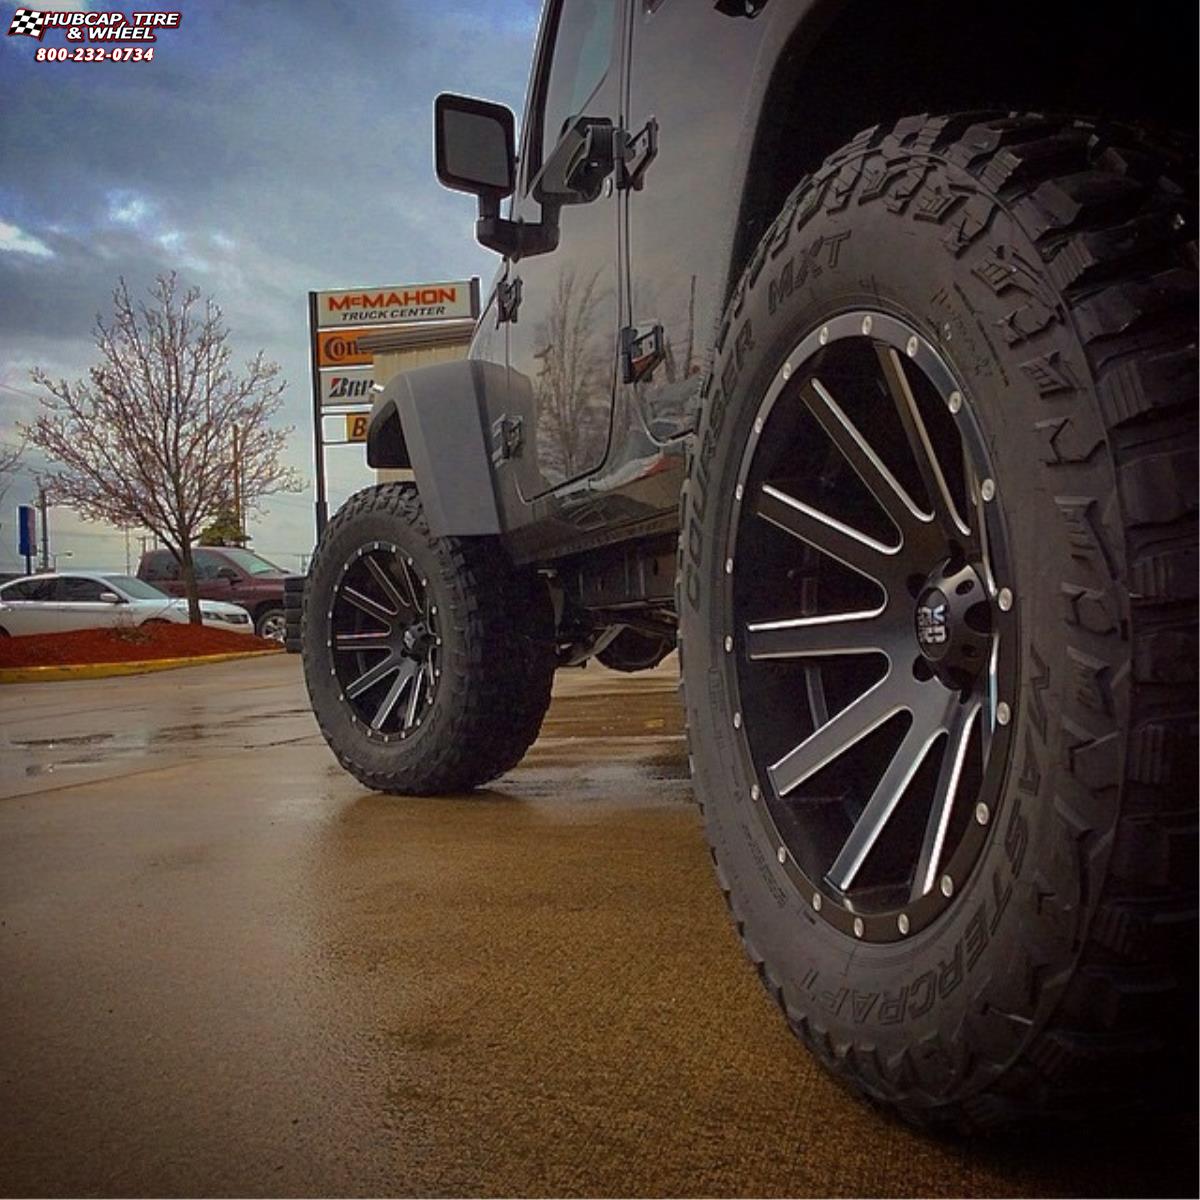 vehicle gallery/2015 jeep wrangler xd series xd818 heist 20x10   wheels and rims